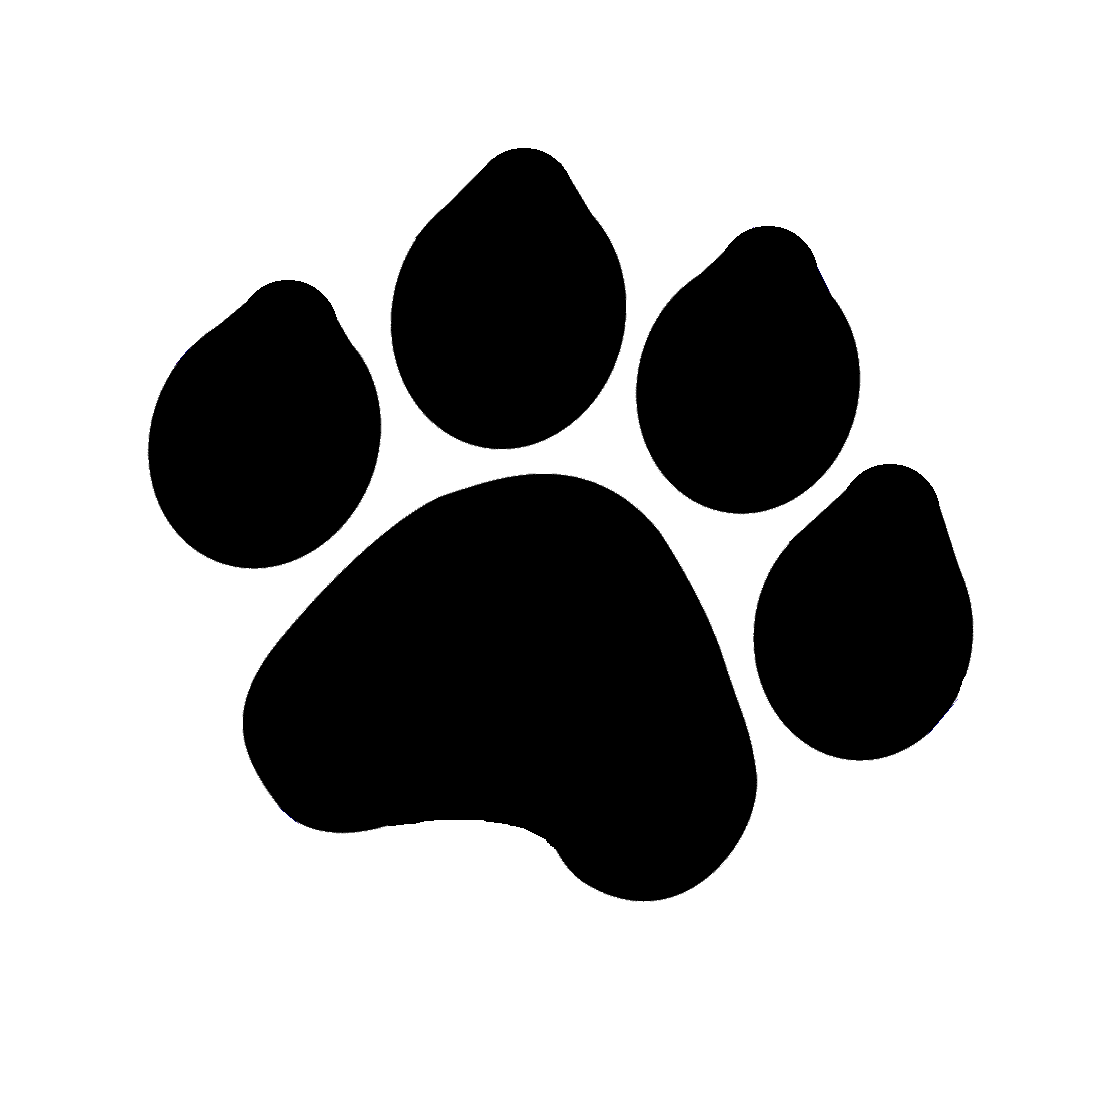 Dog paw print clip art free download